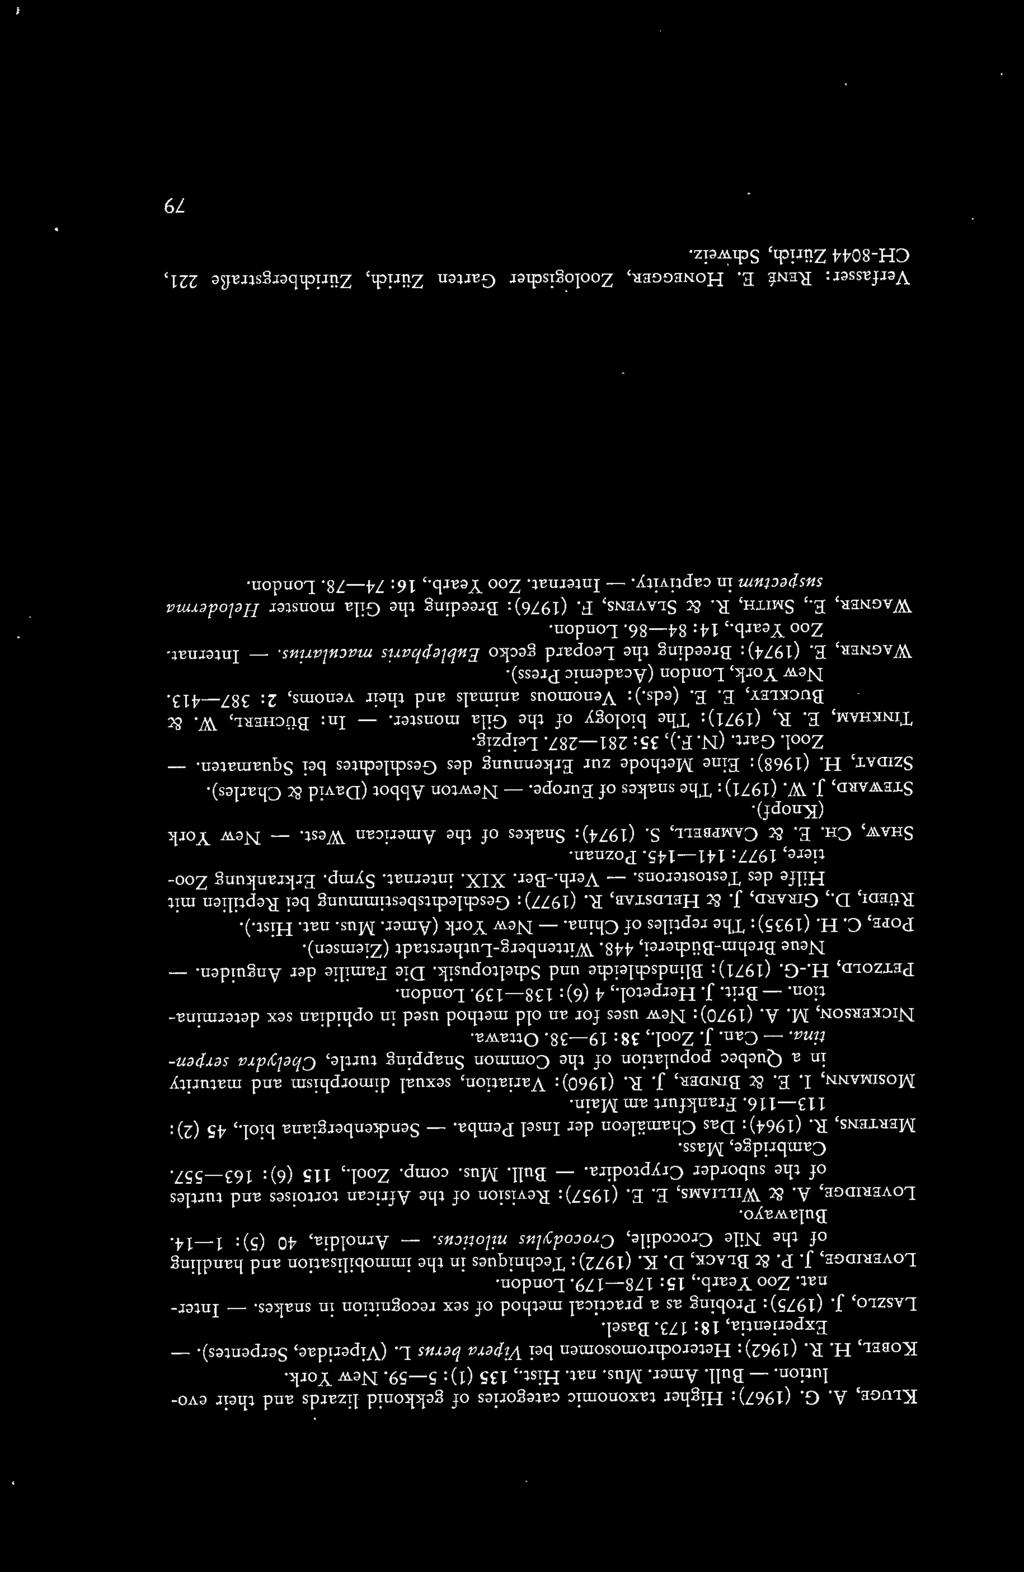 Zoo Yearb., 15: 178-179. London. LovERIDGE, J. P. & BLACK, D. K. (1972): Techniques in the immobilisation and handling of the Nile Crocodile, Crocodylus niloticus. - Arnoldia, 40 (5): 1-14. Bulawayo.